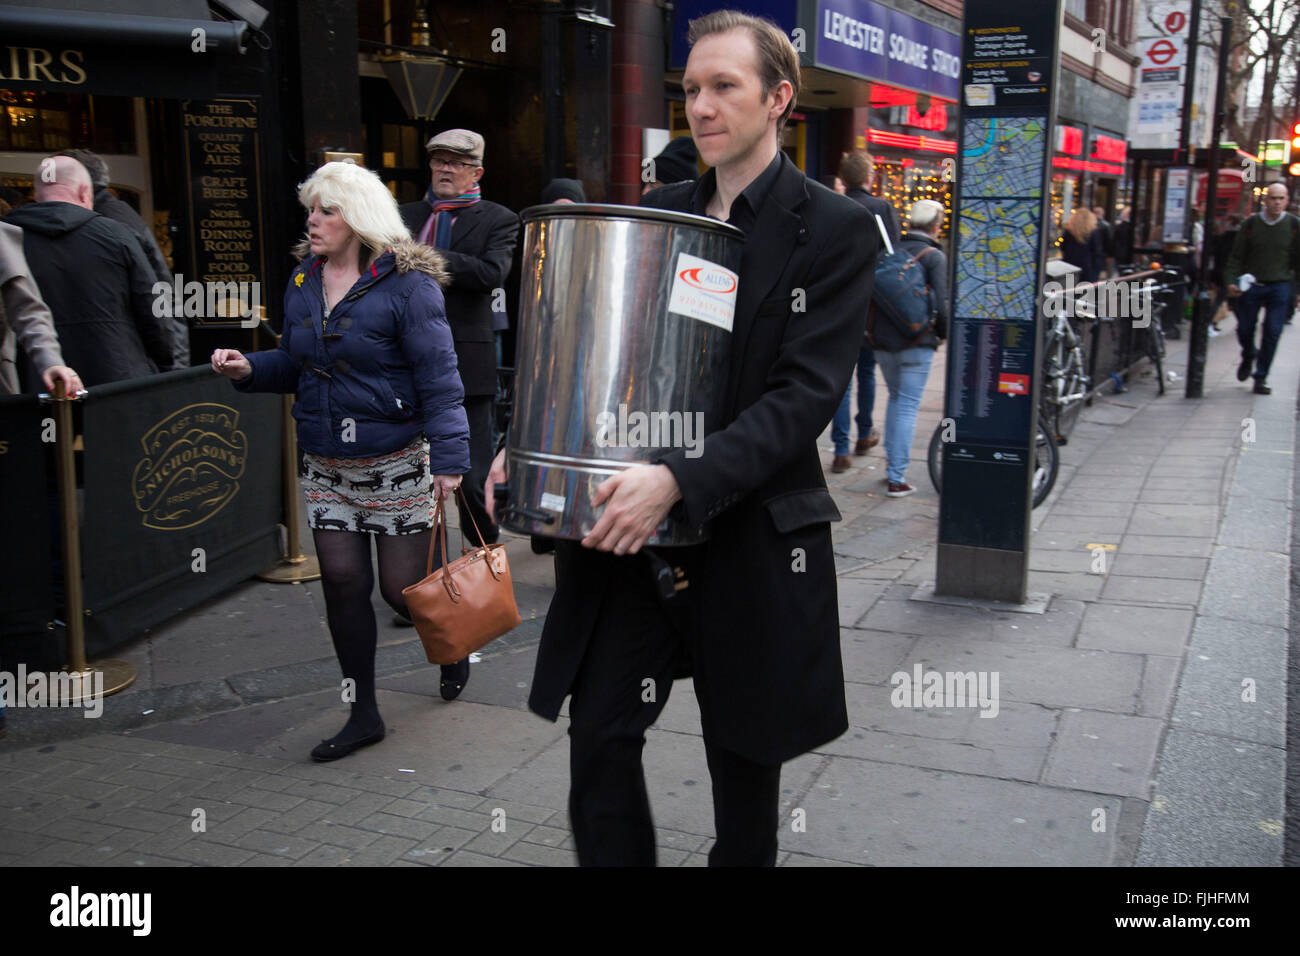 https://c8.alamy.com/comp/FJHFMM/man-carrying-a-tea-urn-along-charing-cross-road-london-uk-an-unusual-FJHFMM.jpg